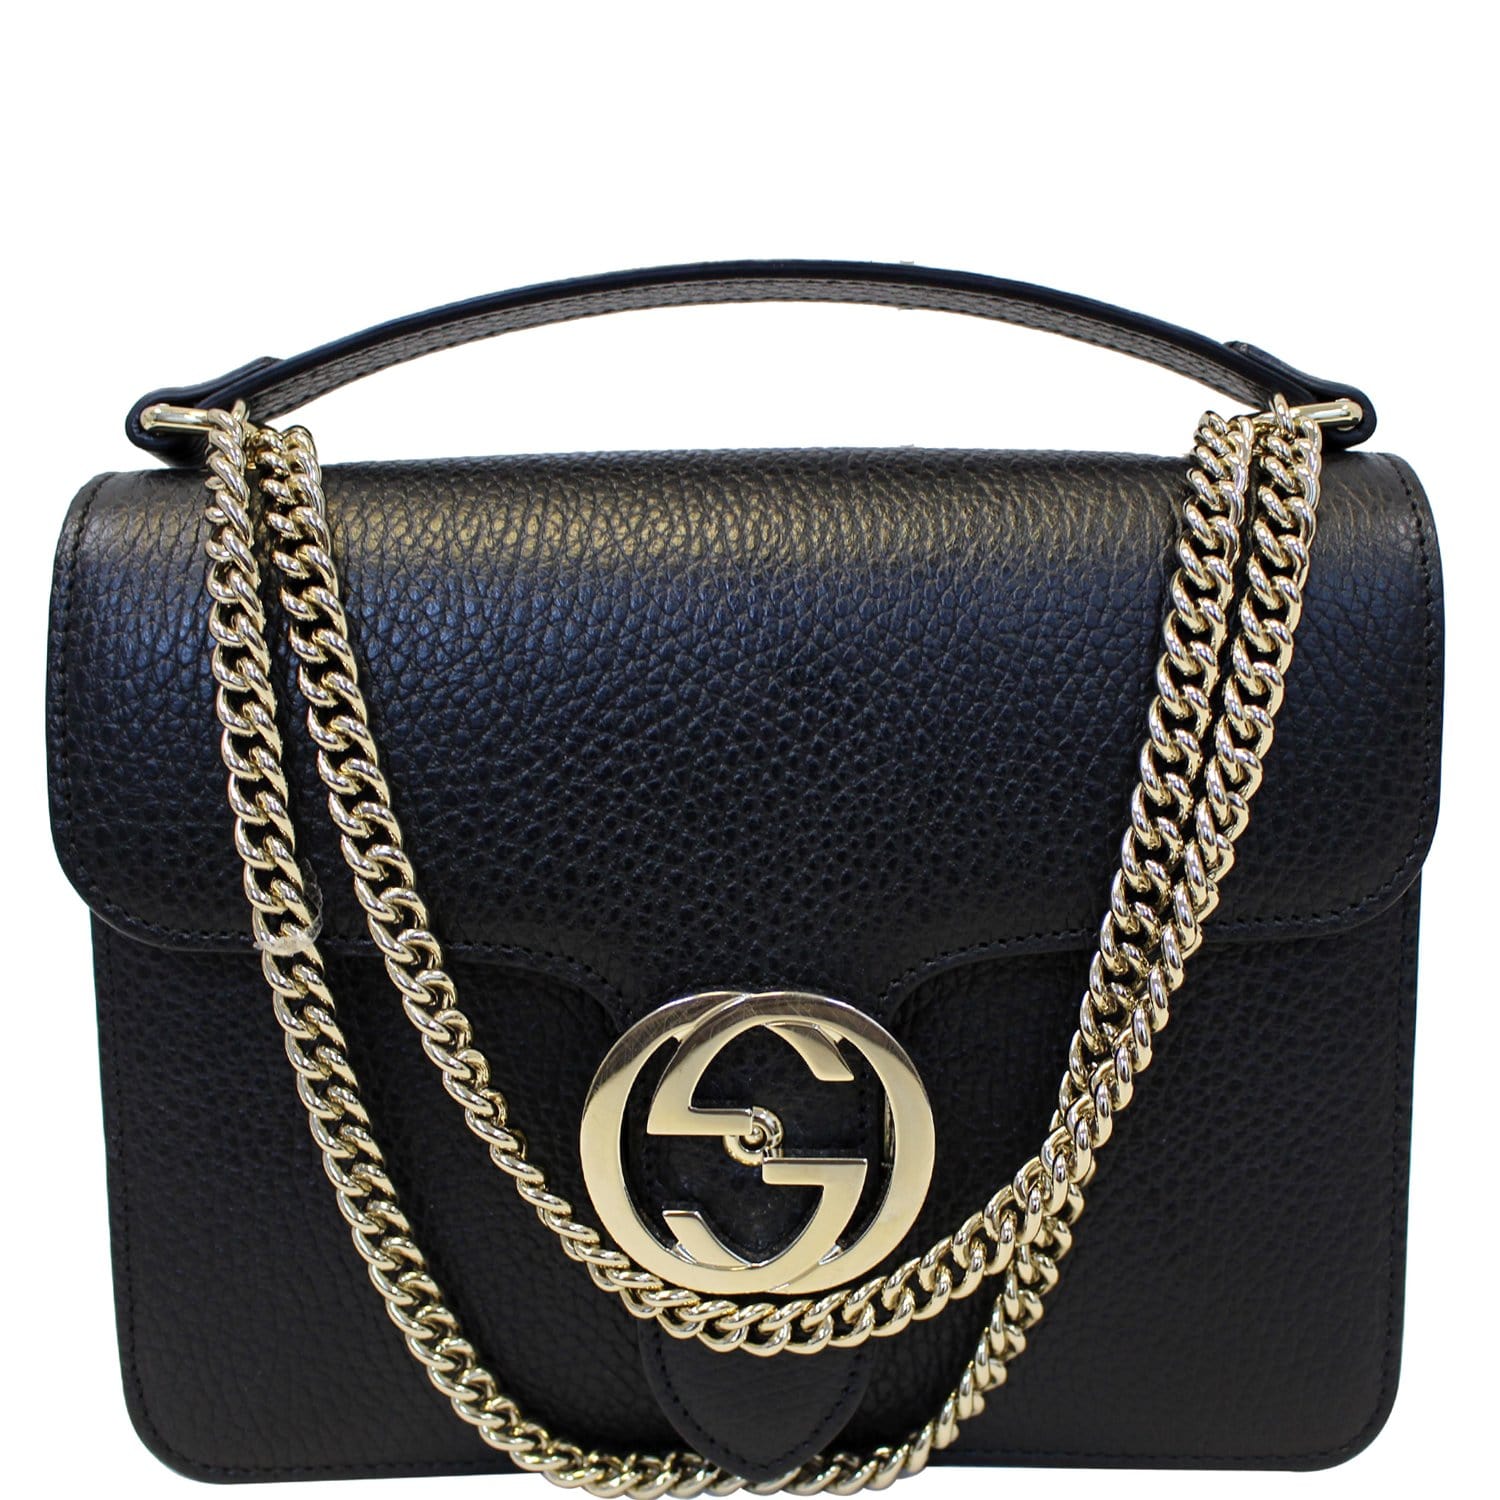 Gucci Small Interlocking GG Crossbody Bag